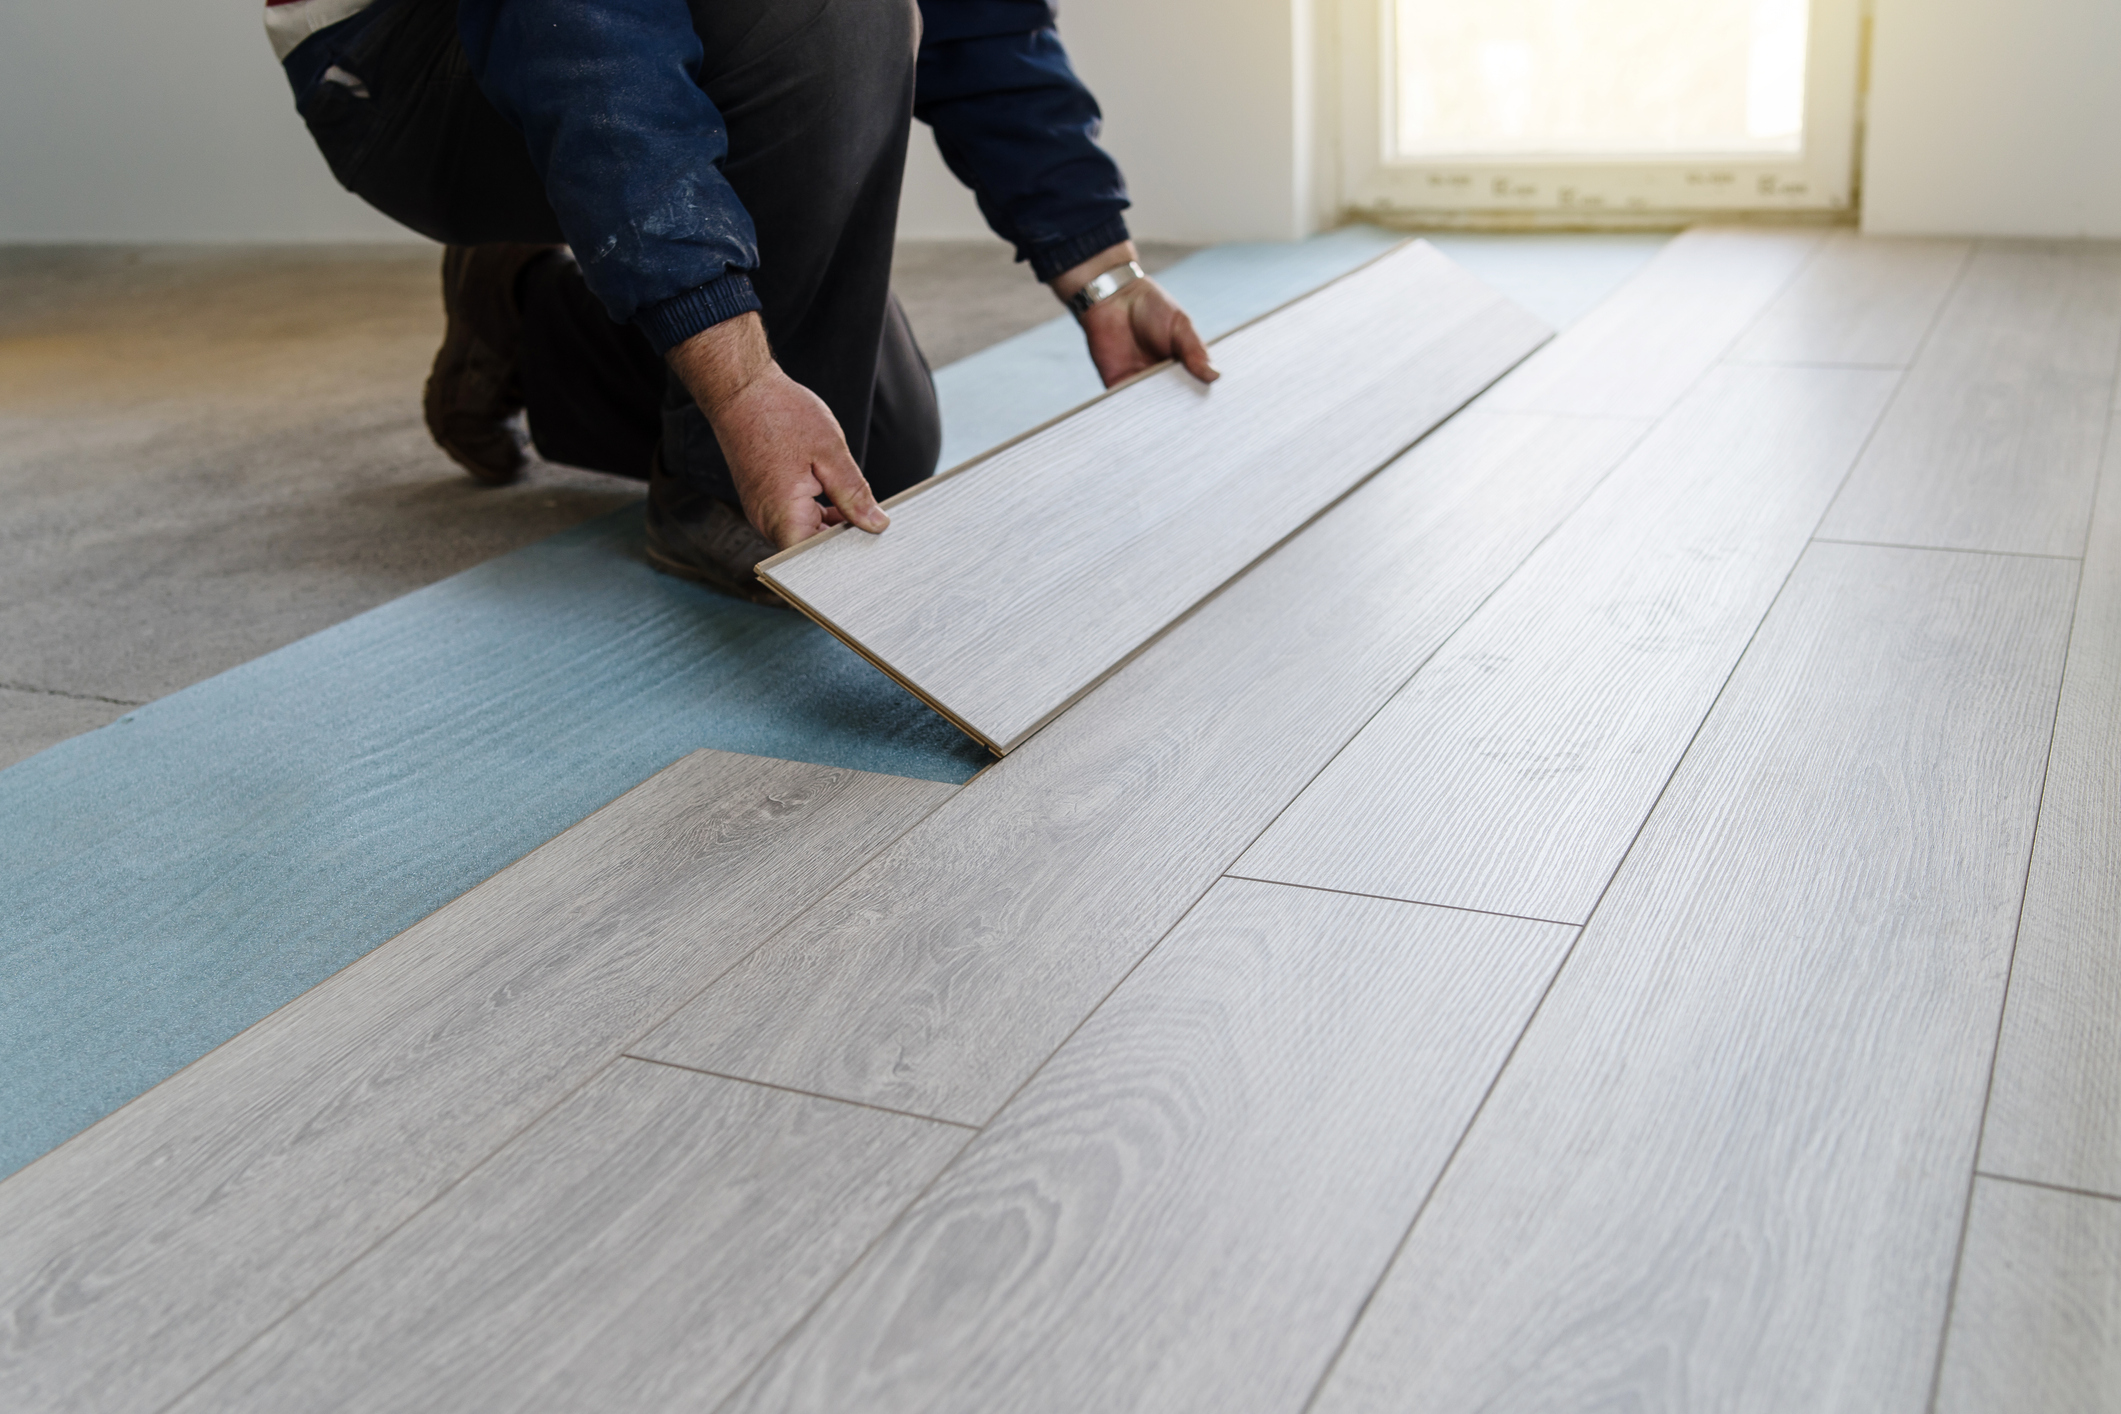 Easy Temporary Flooring Ideas, Can I Put Laminate Flooring On Top Of Carpet